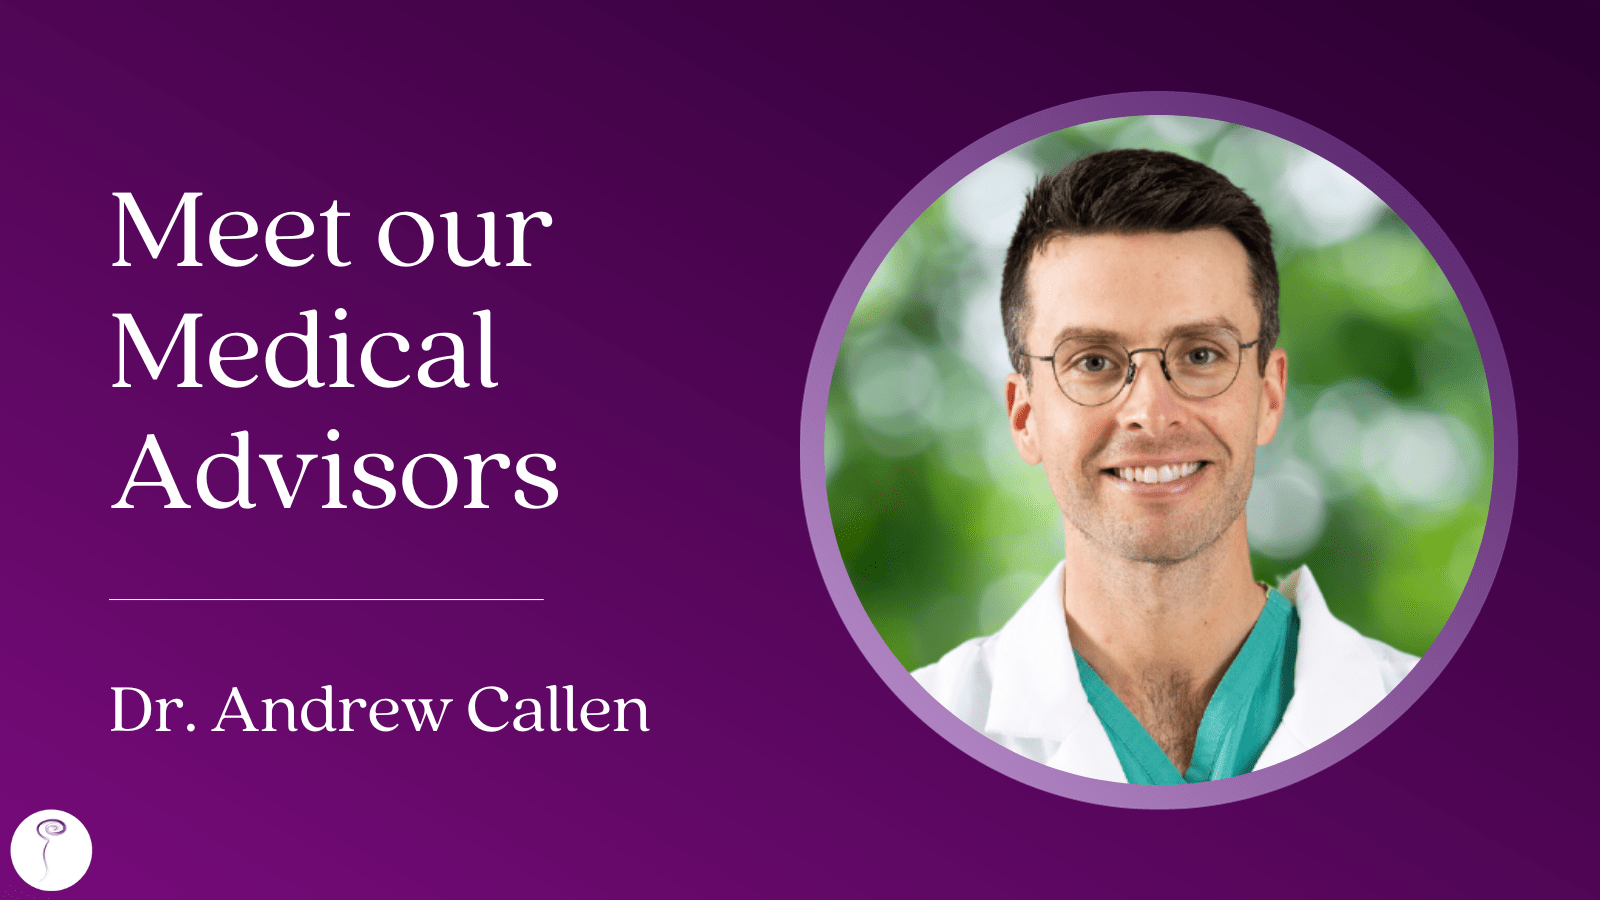 Meet our Medical Advisors: Dr. Andrew Callen